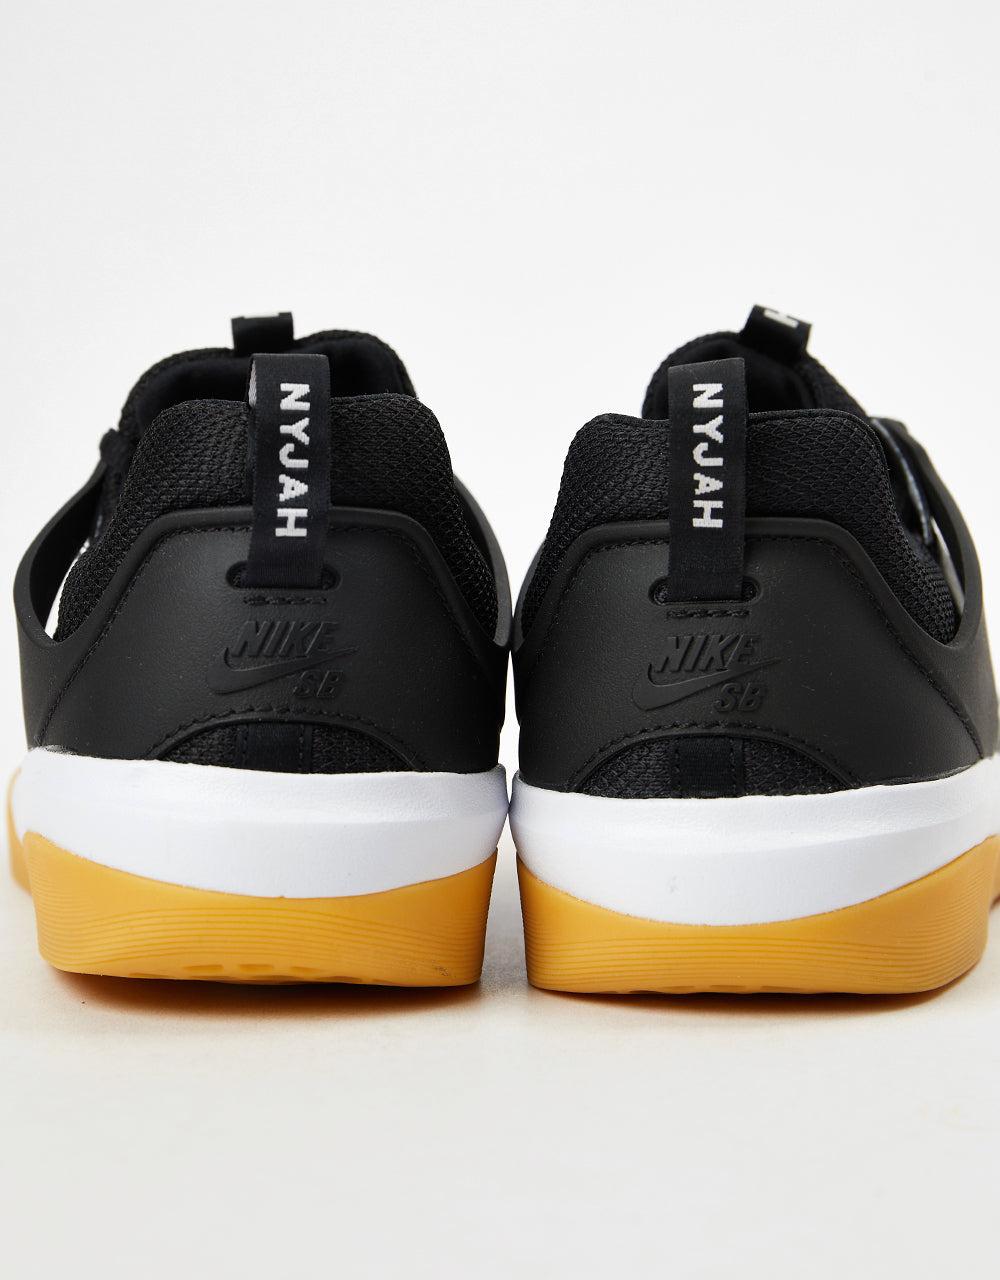 Nike SB Zoom Nyjah 3 Skate Shoes - Black/White-Black-White-Gum Lt Brown